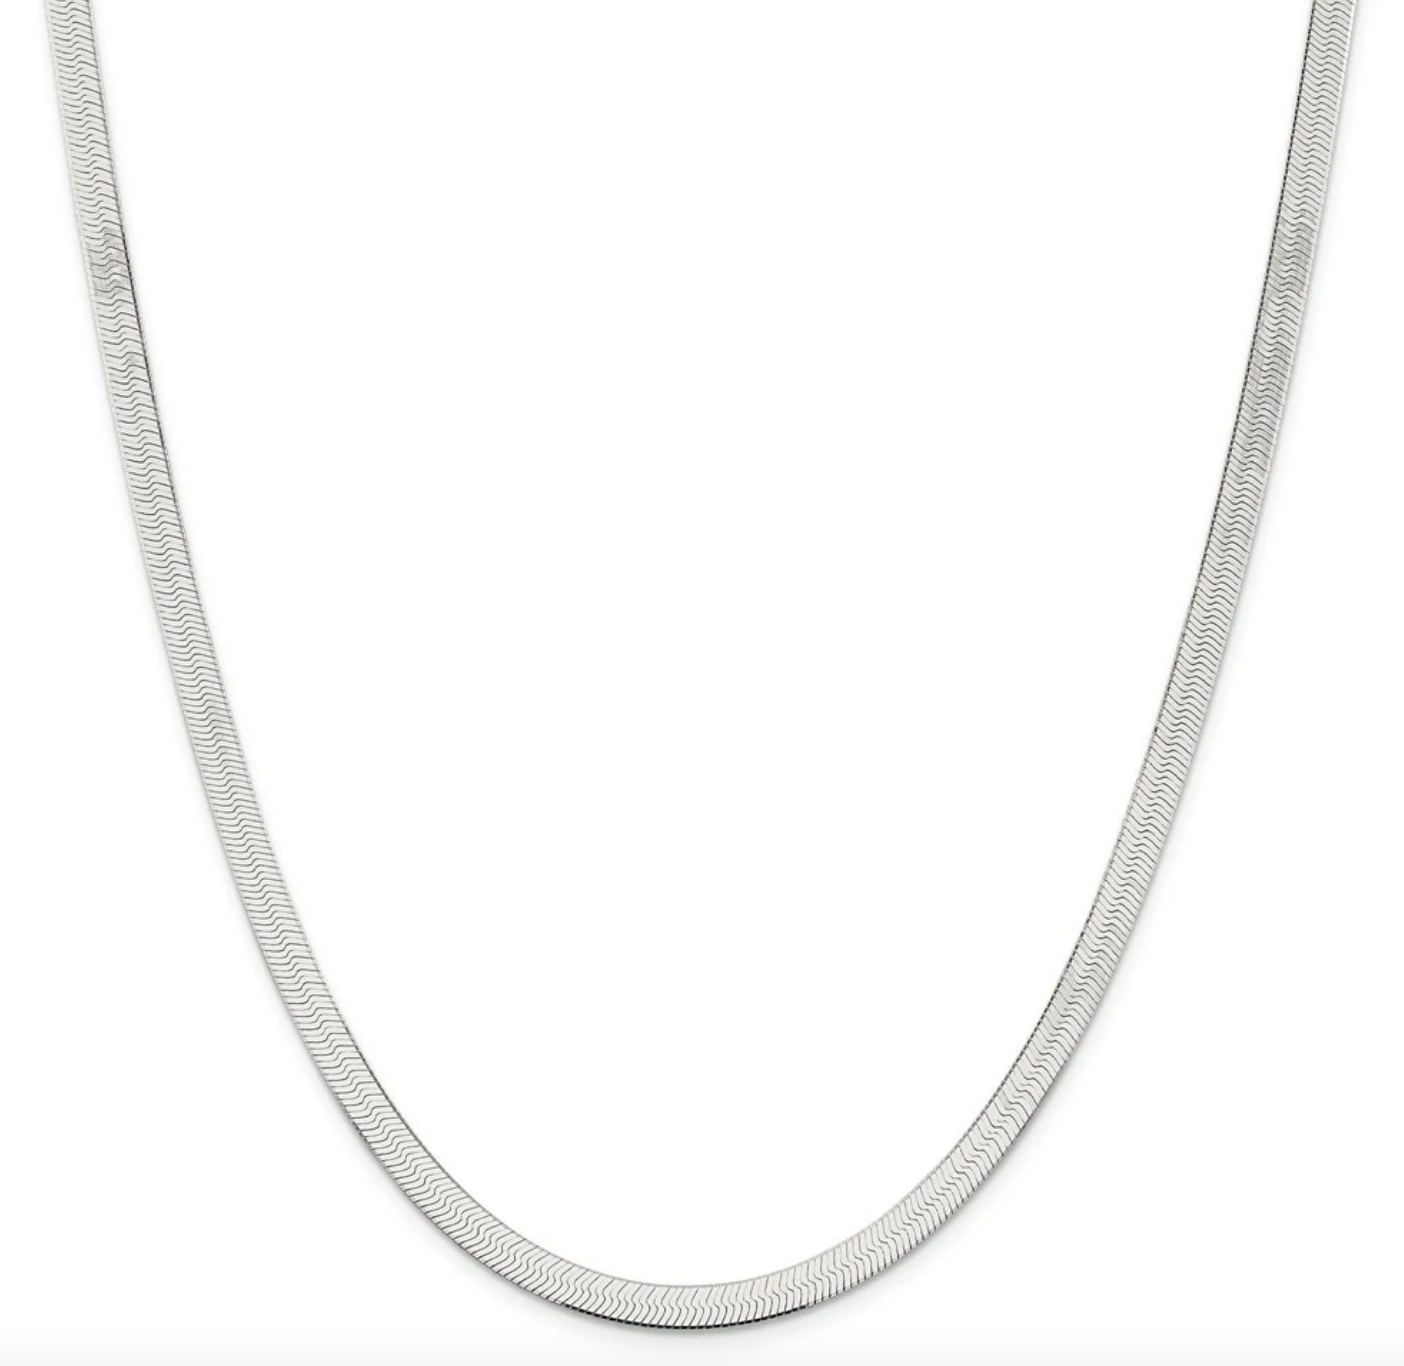 7 Herringbone Chain Necklaces for Women & Men | JewelryJealousy